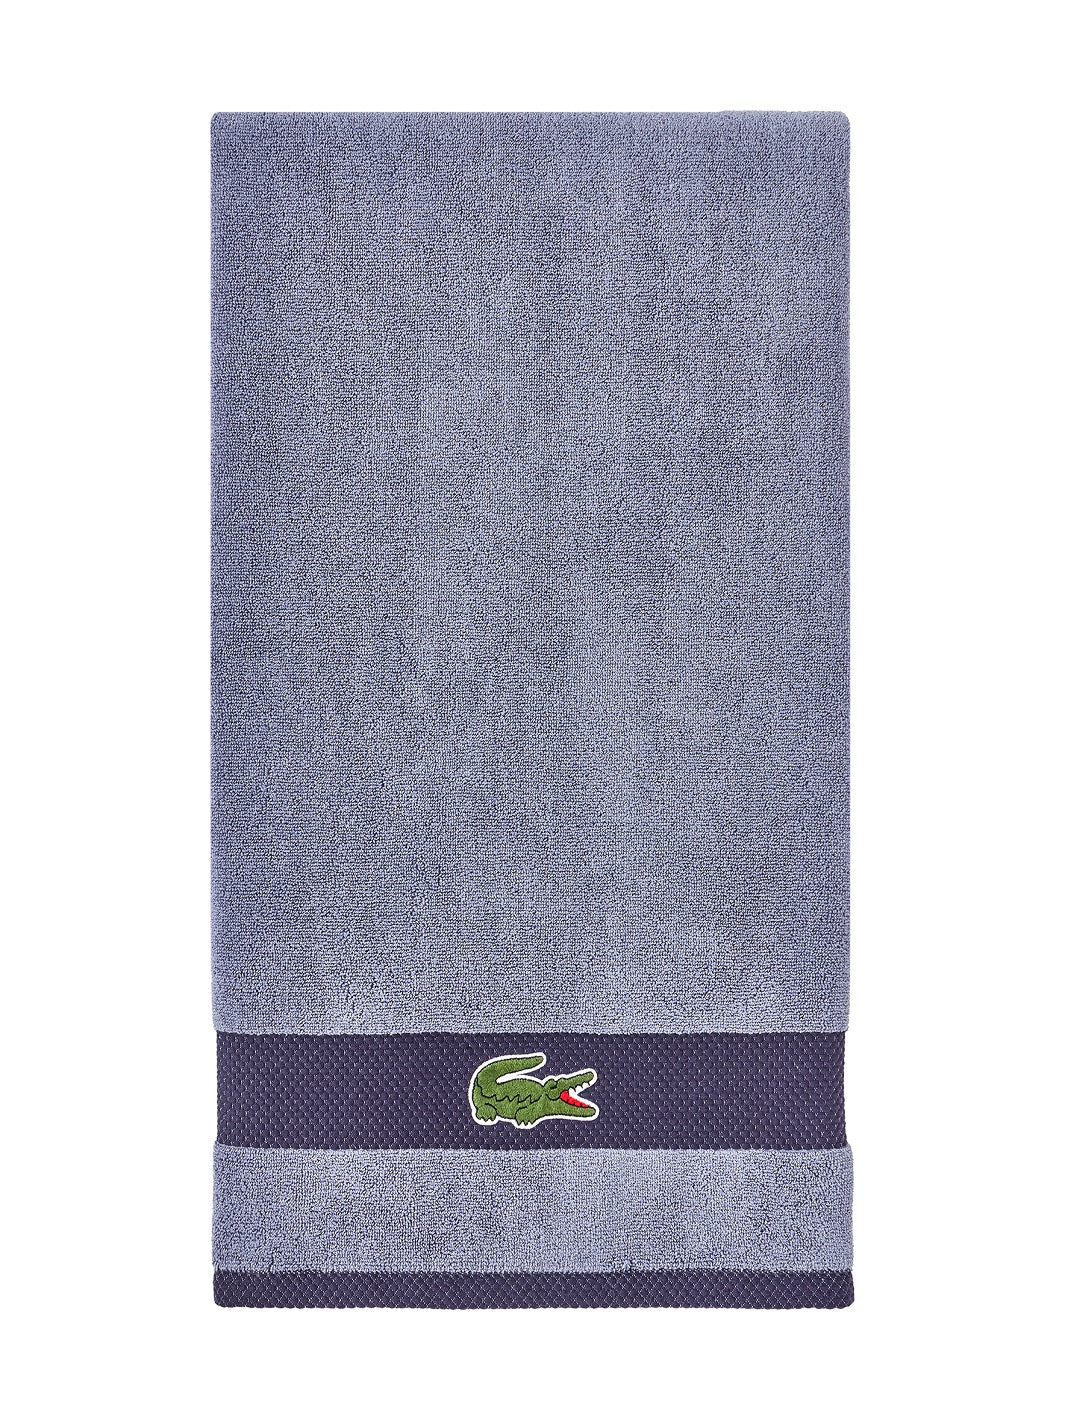 Lacoste Heritage Stripe Bath Towel